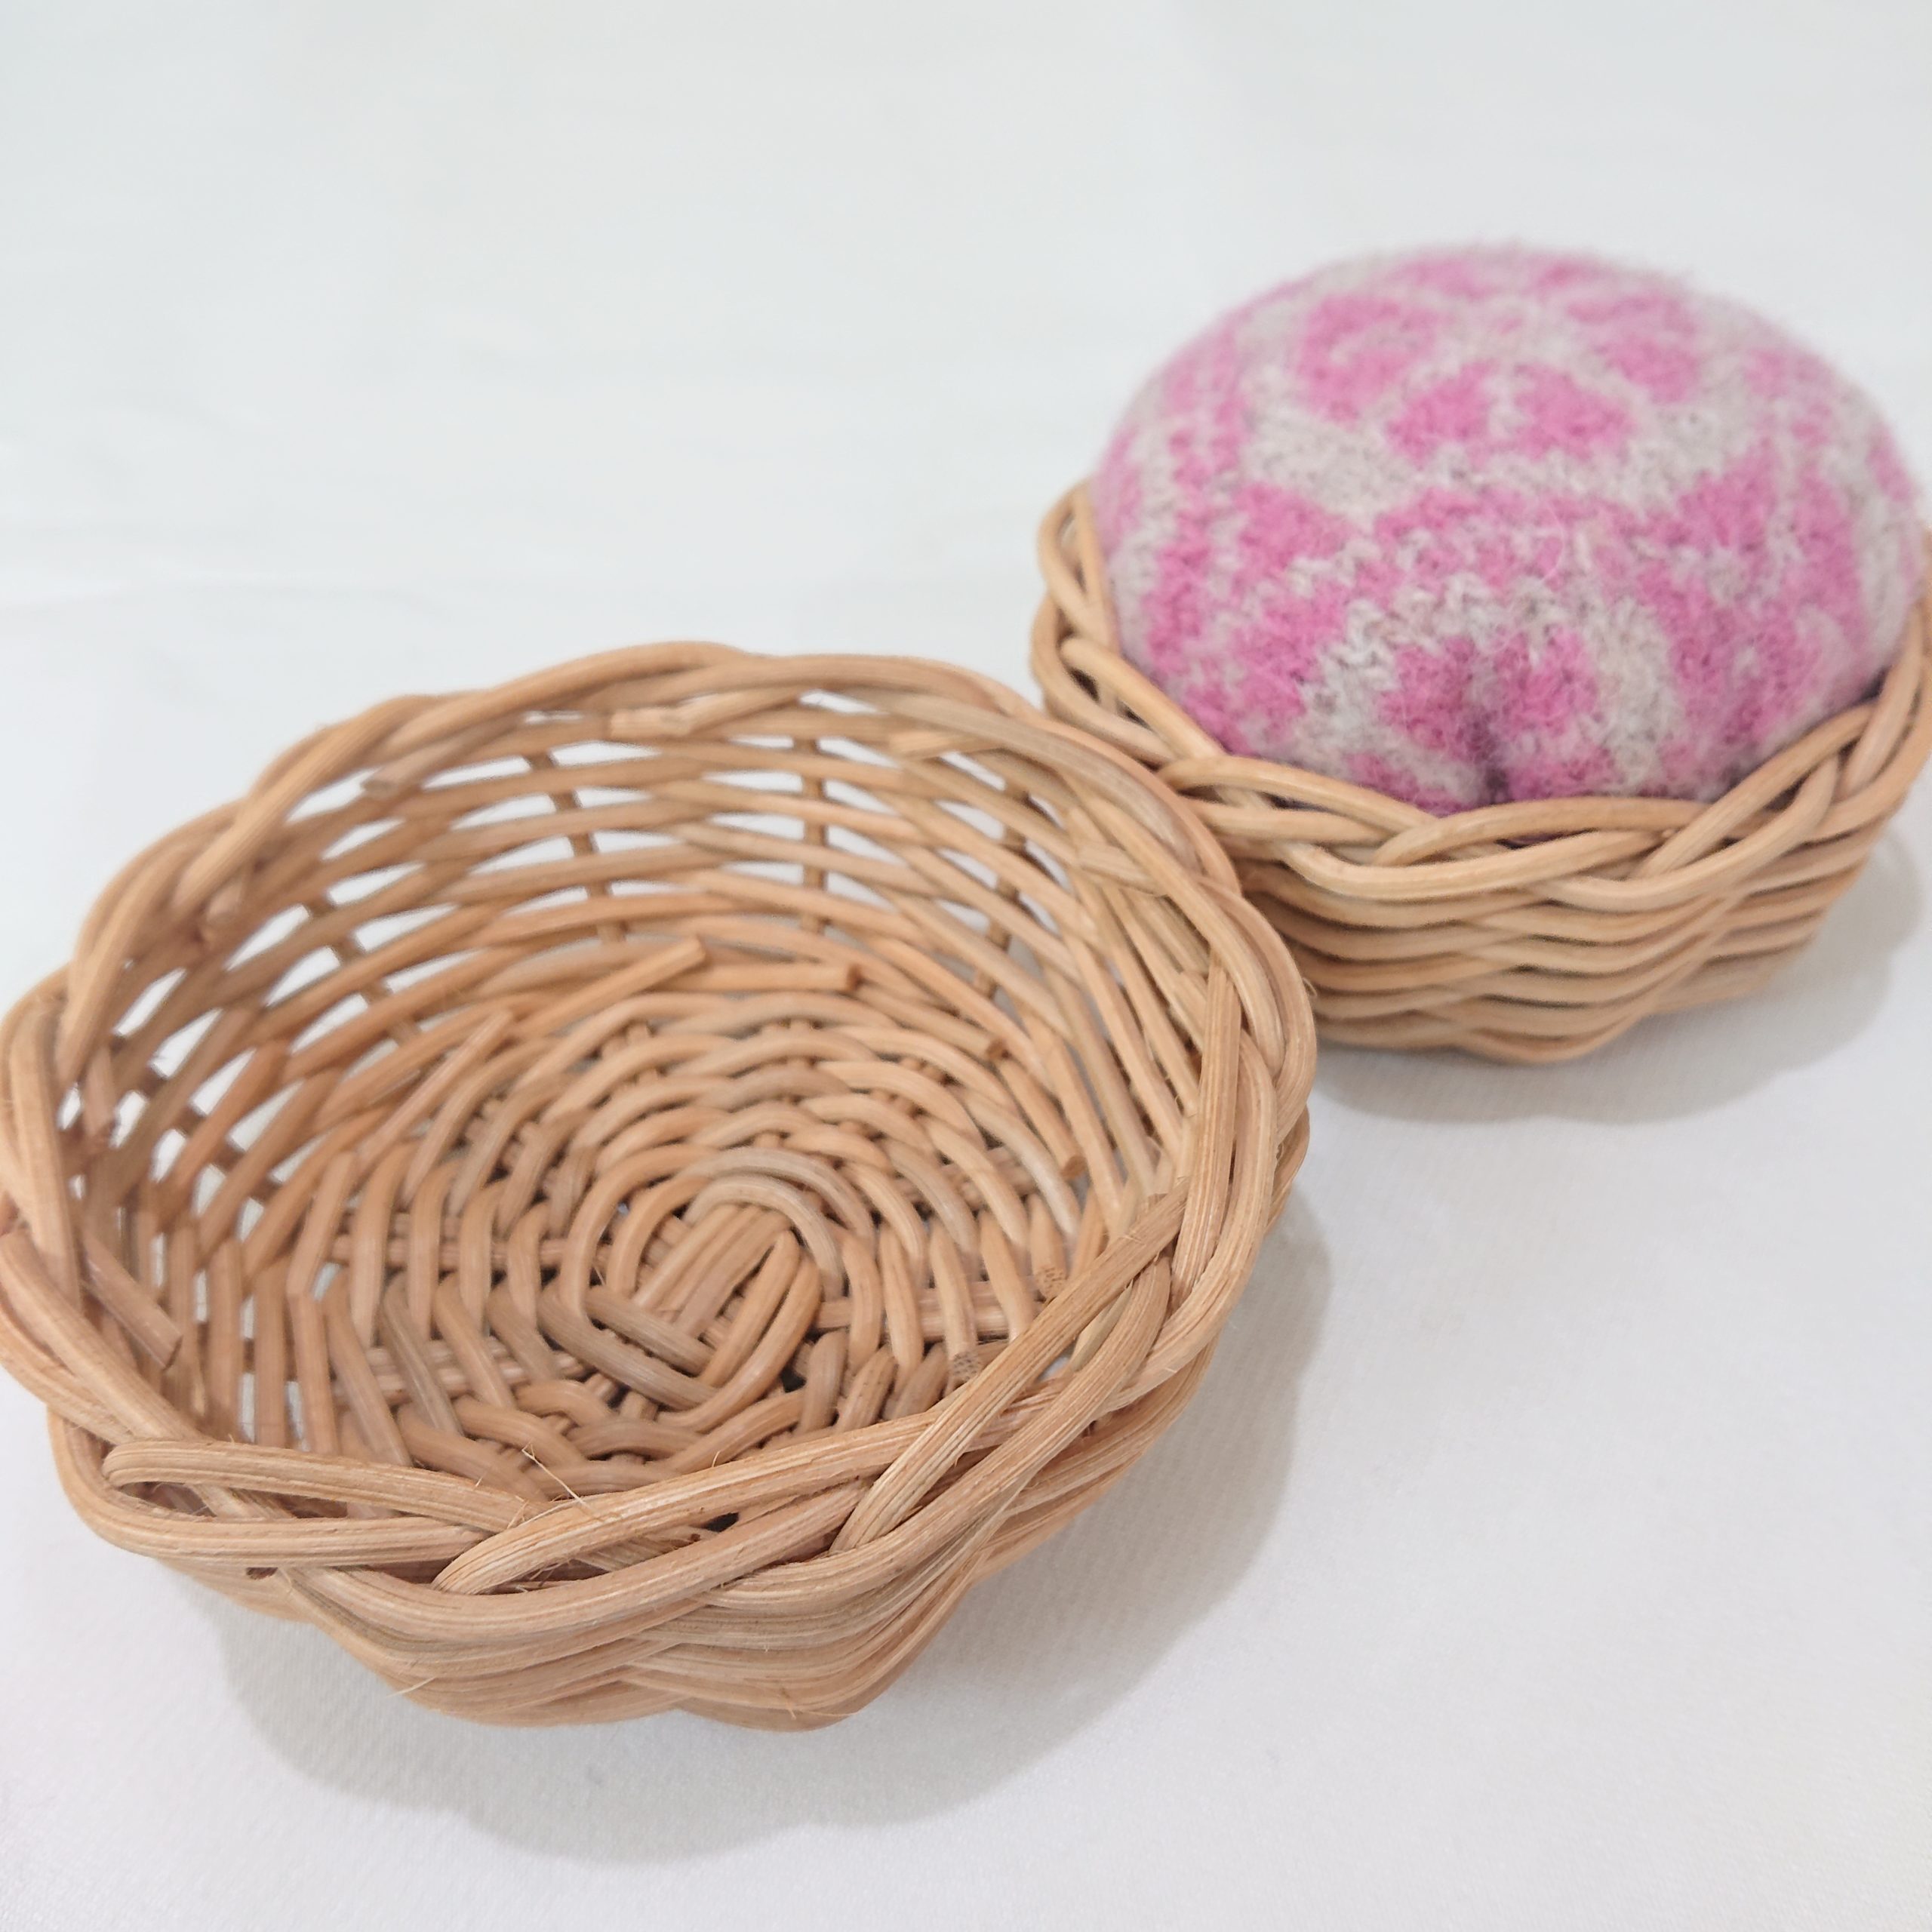 【BasketMoon×伊吹広子】 かごと編み地を編むピンクッション（土曜午前クラス）